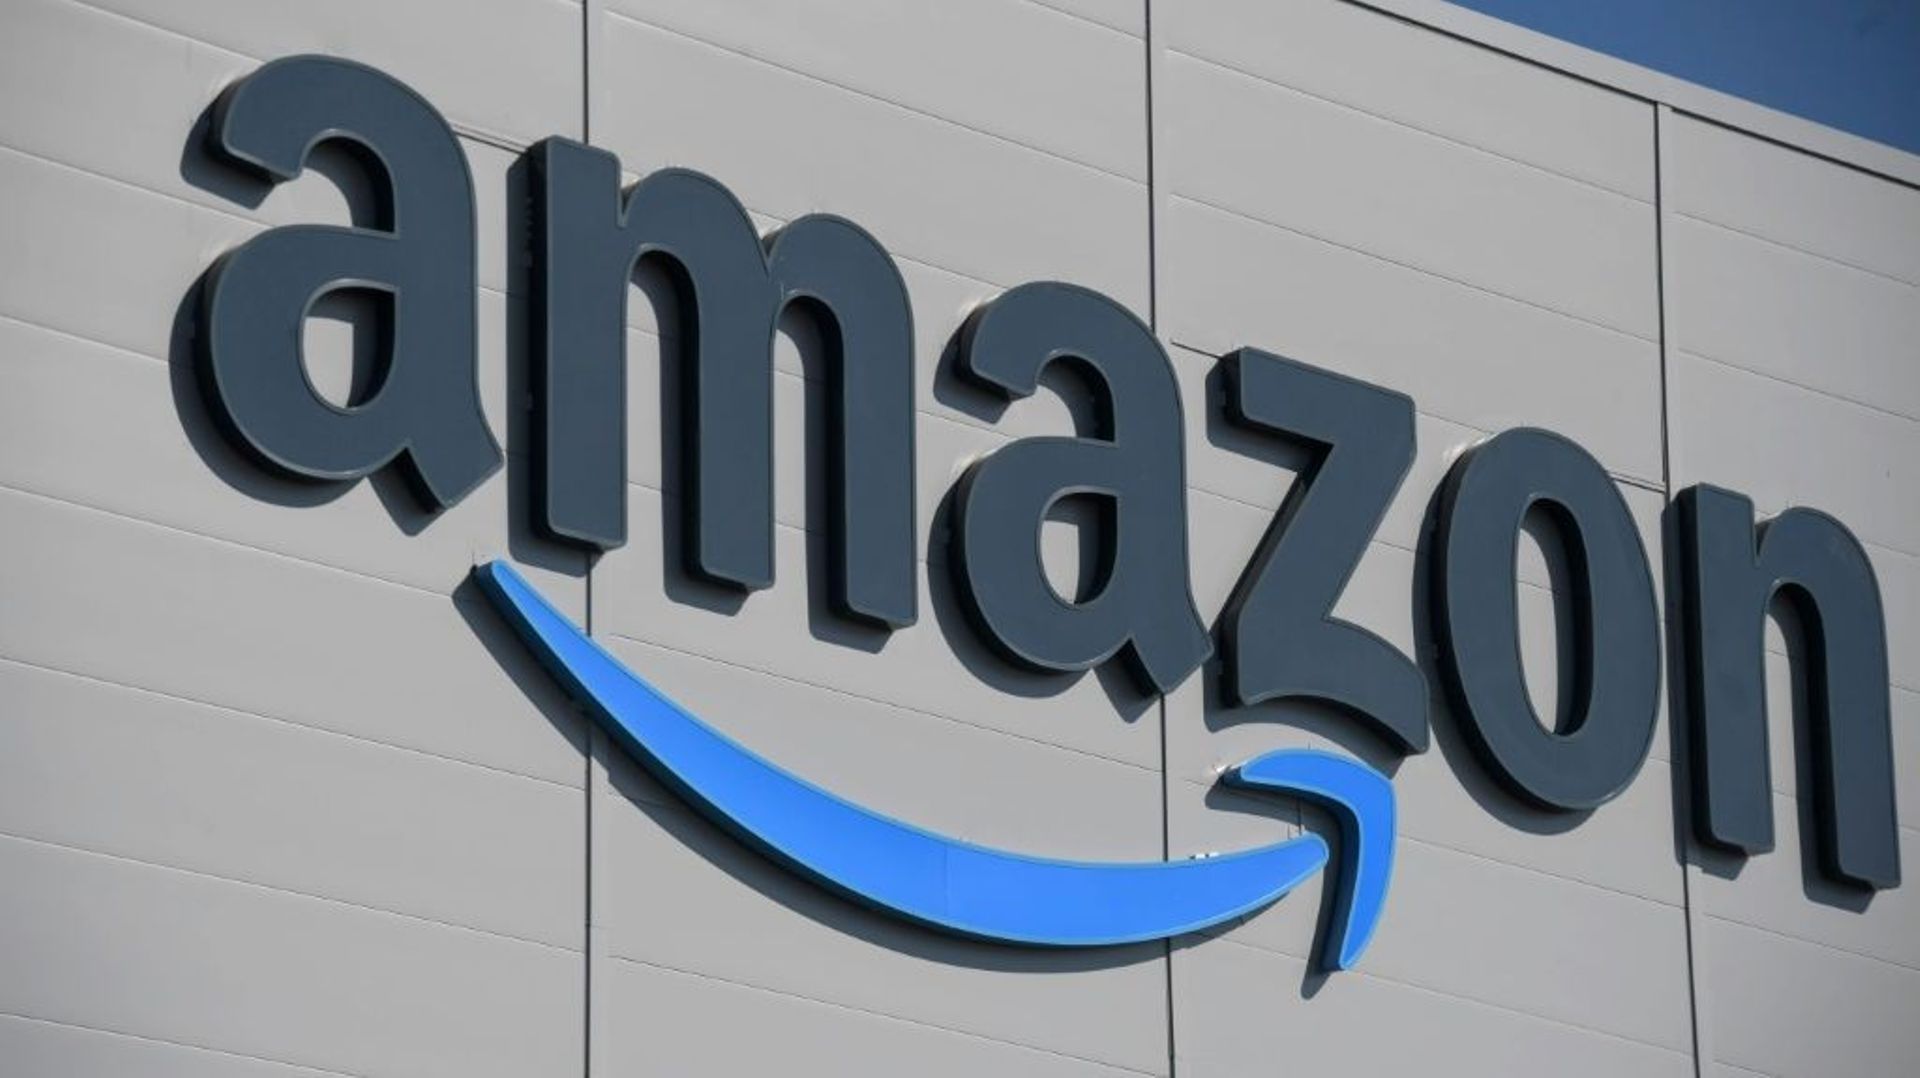 Amazon saw profits slip in its latest earnings